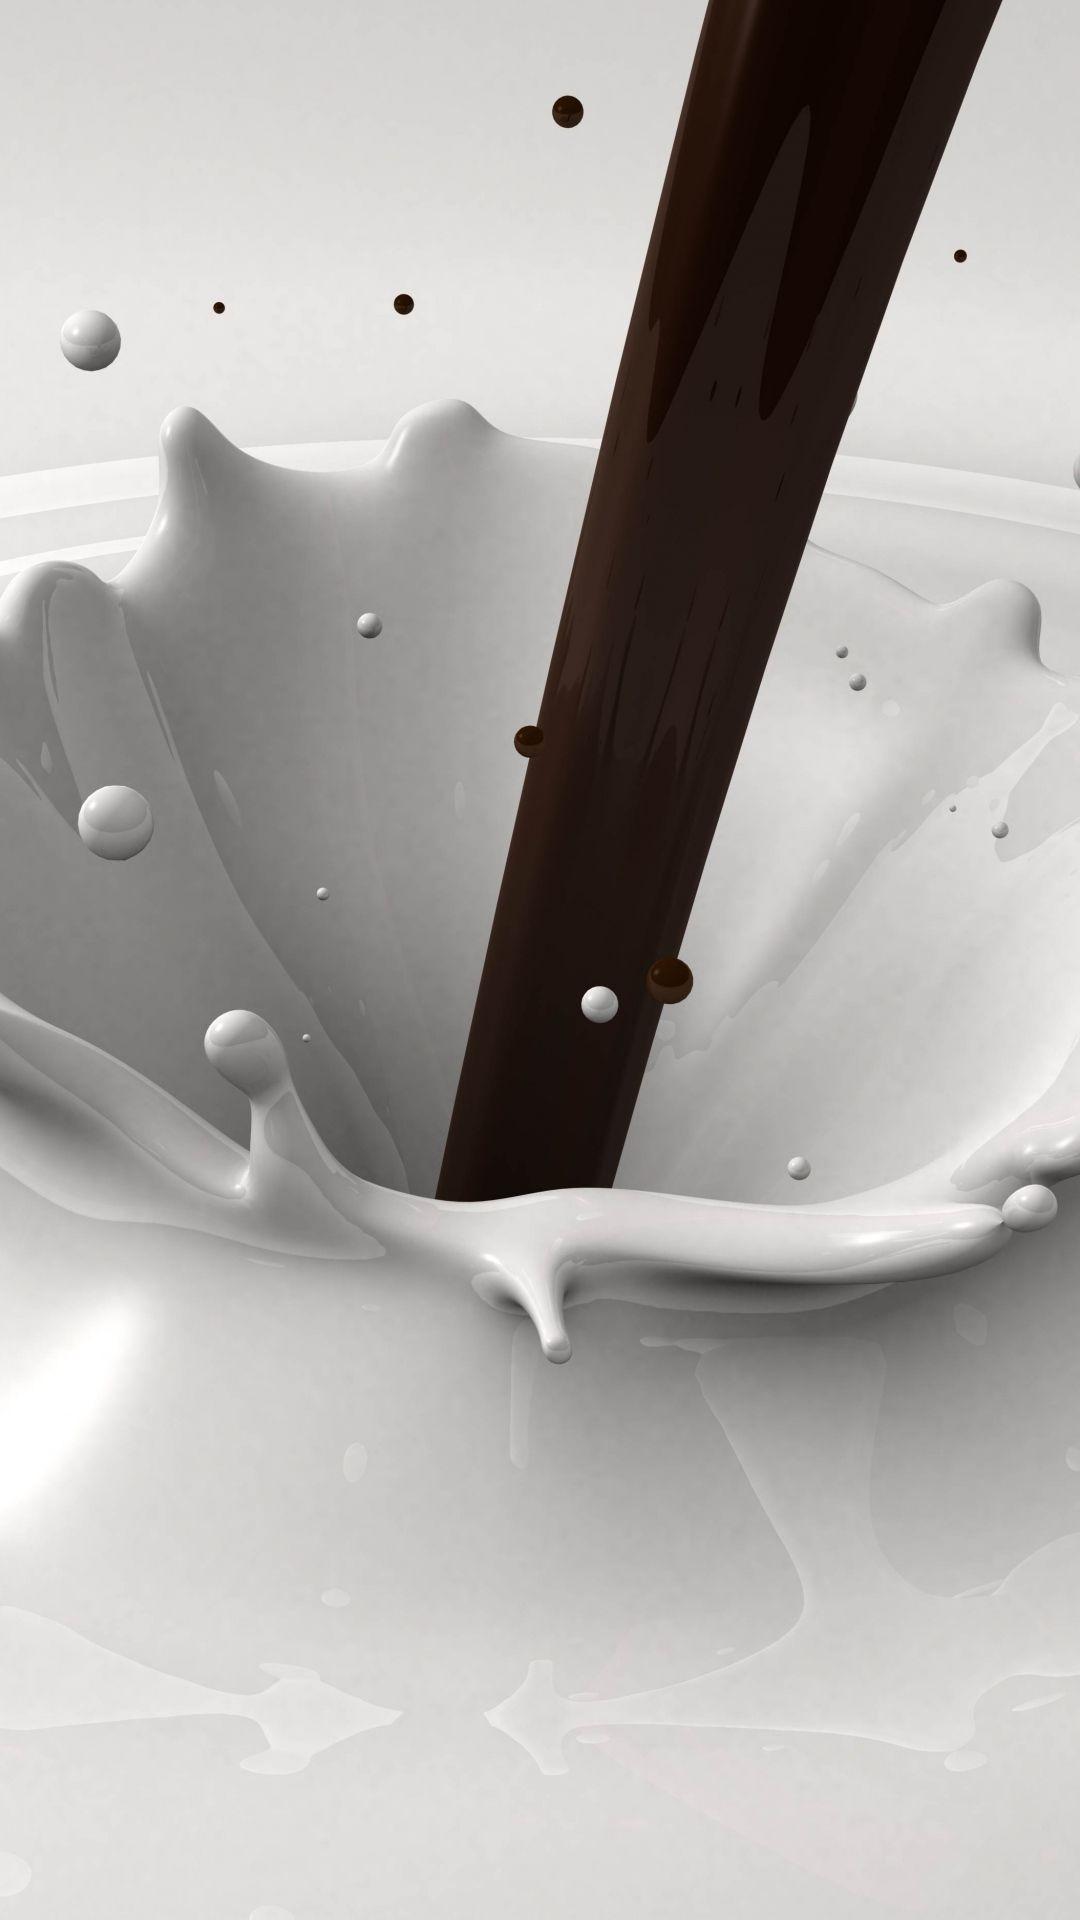 Chocolate Milk Splash iPhone 6 Plus HD Wallpaper HD Download